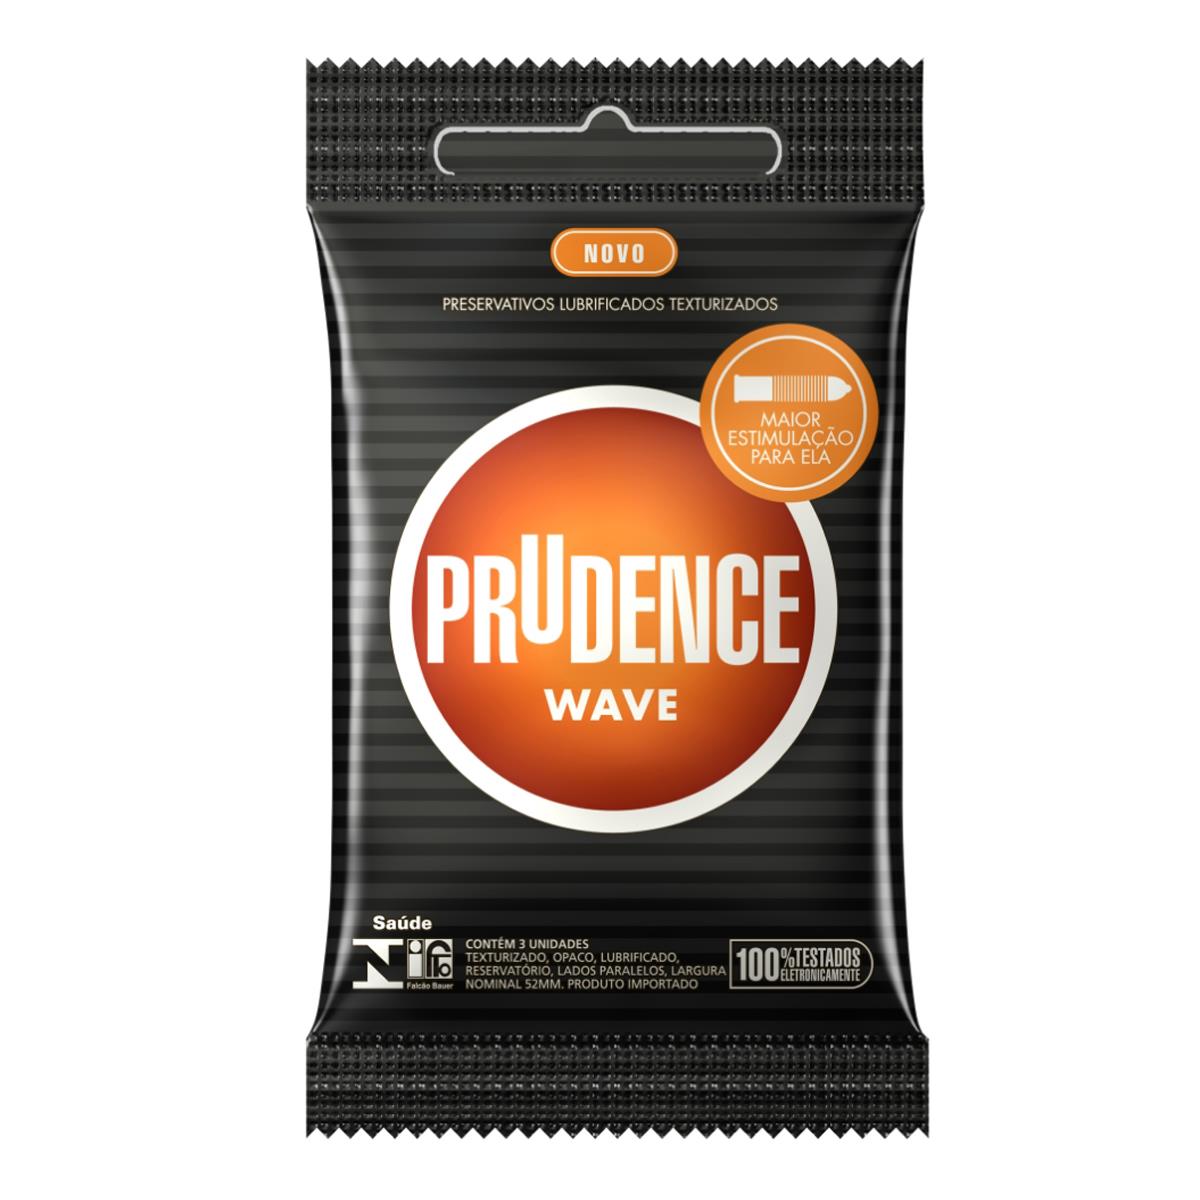 Preservativos Wave Prudence